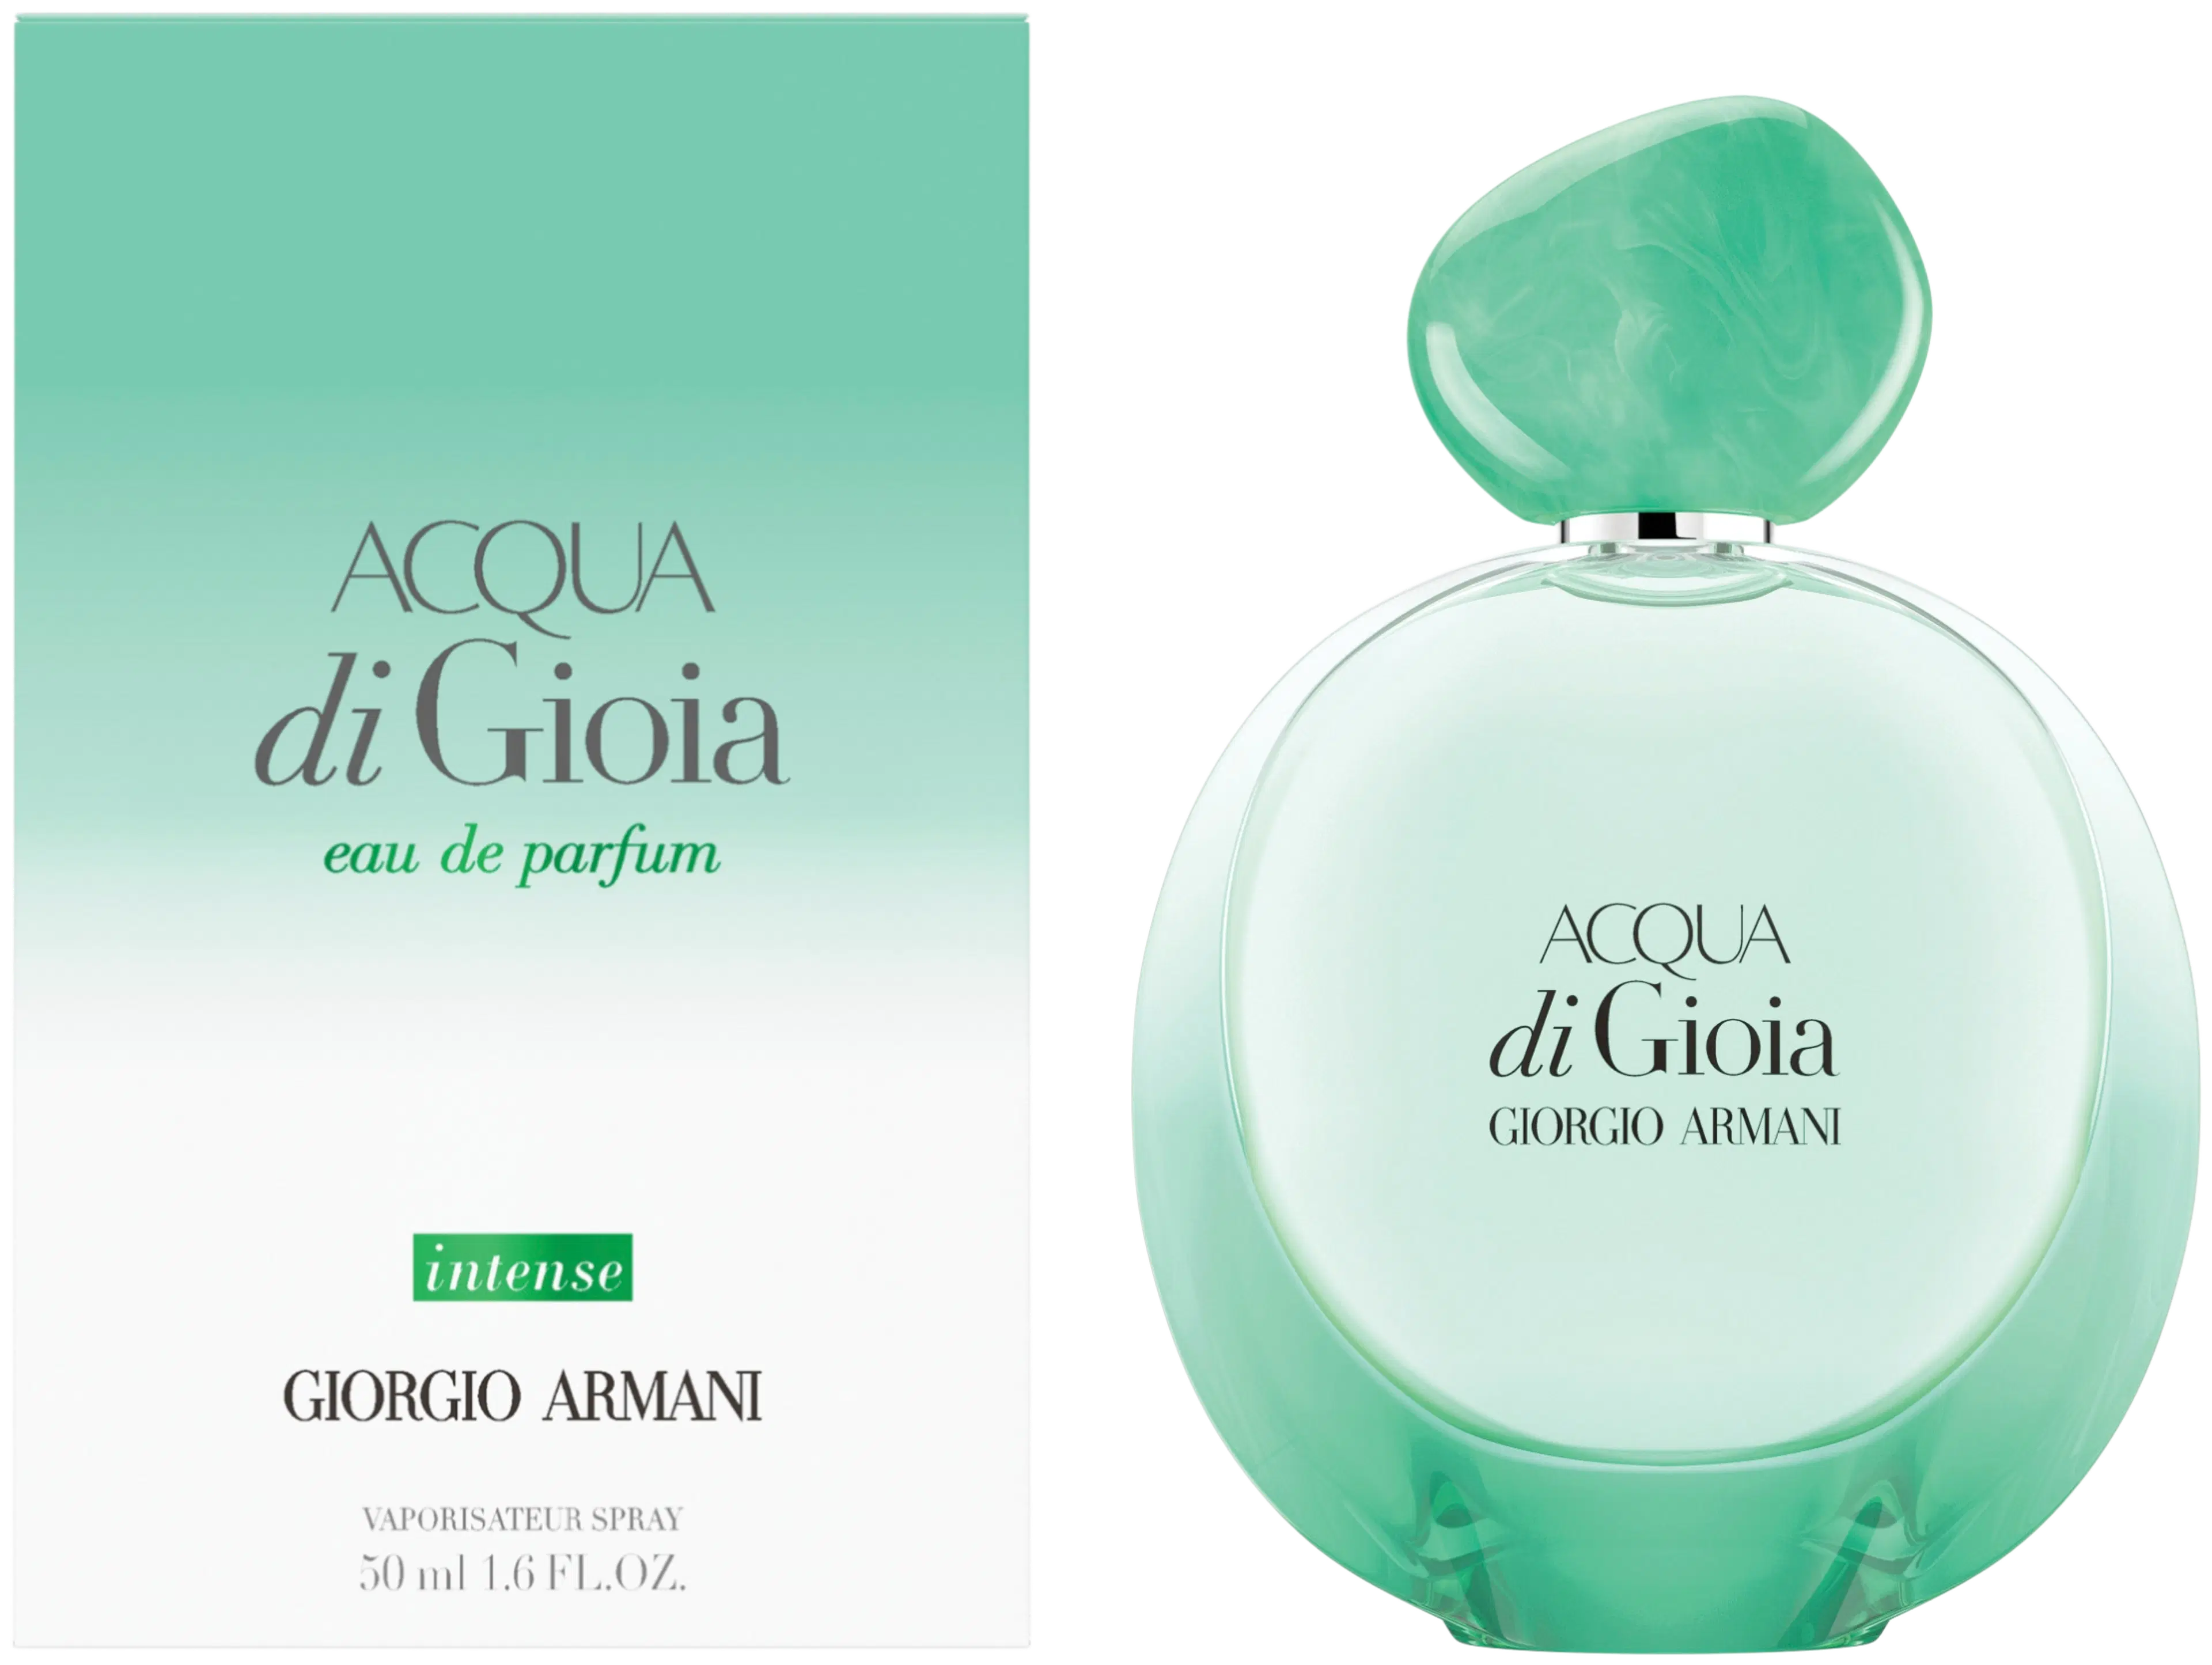 Giorgio Armani Acqua di Gioia Eau de Parfum Intense tuoksu 50 ml